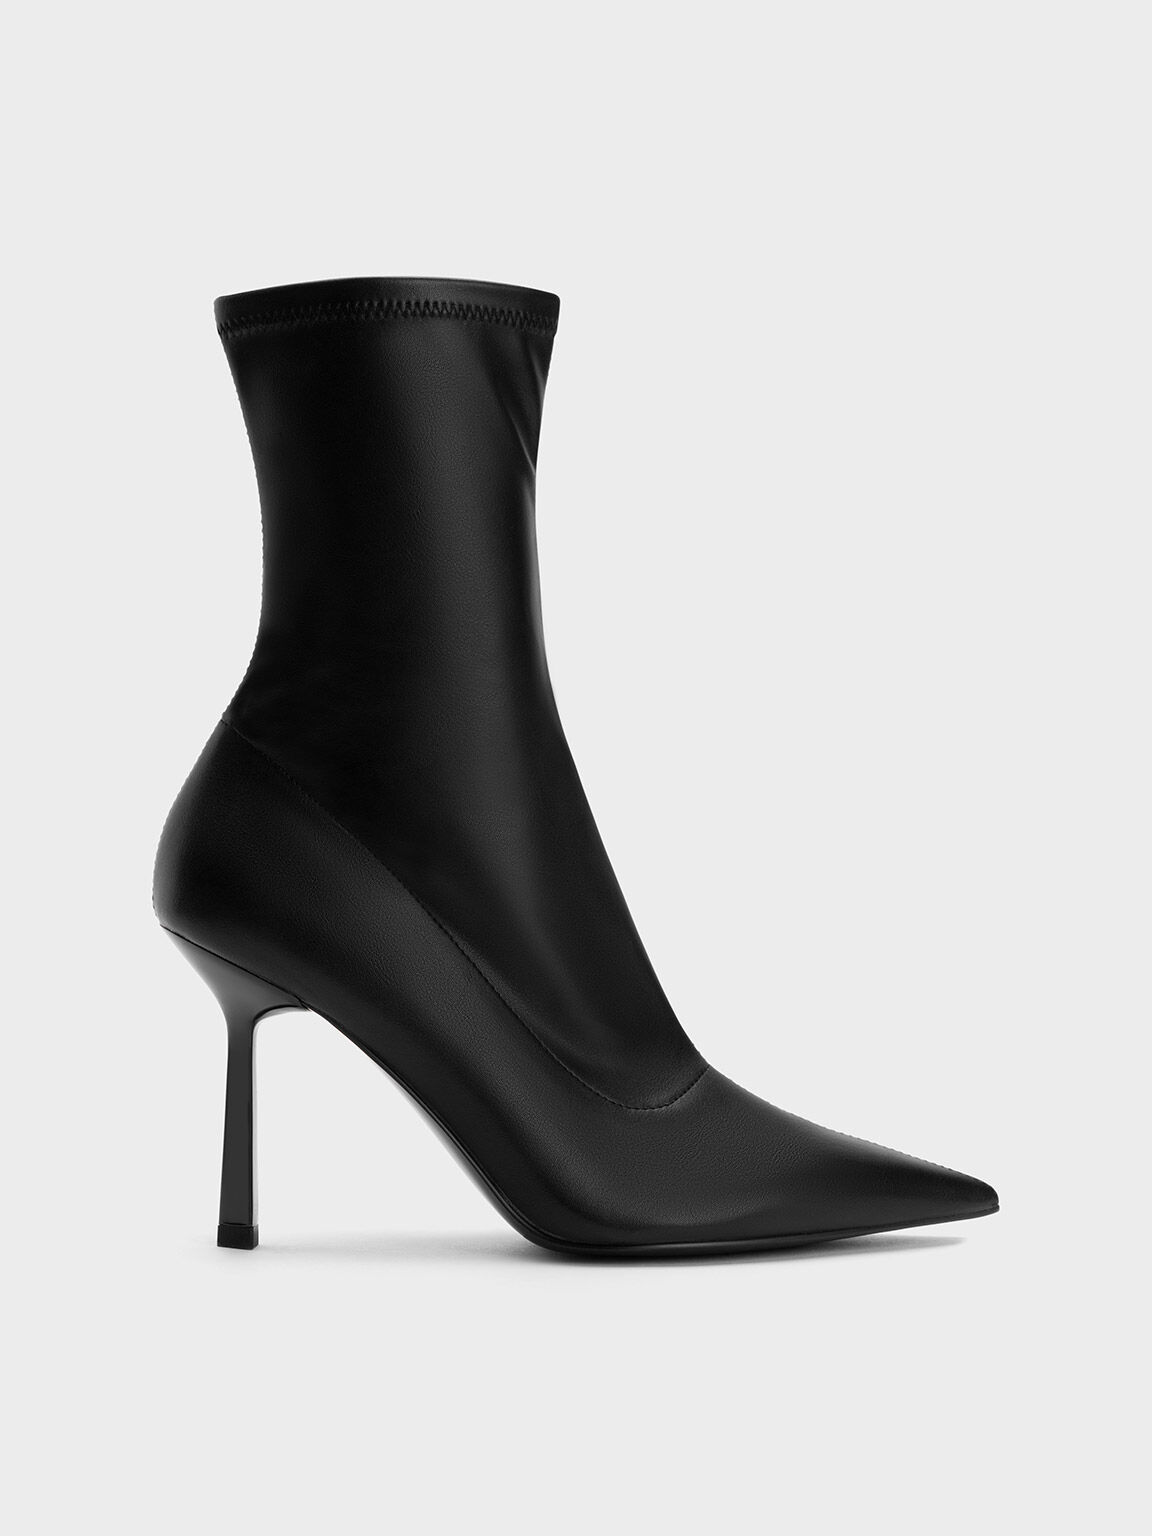 Black Boots UK – Black Heeled Ankle Boots & More | Terry de Havilland